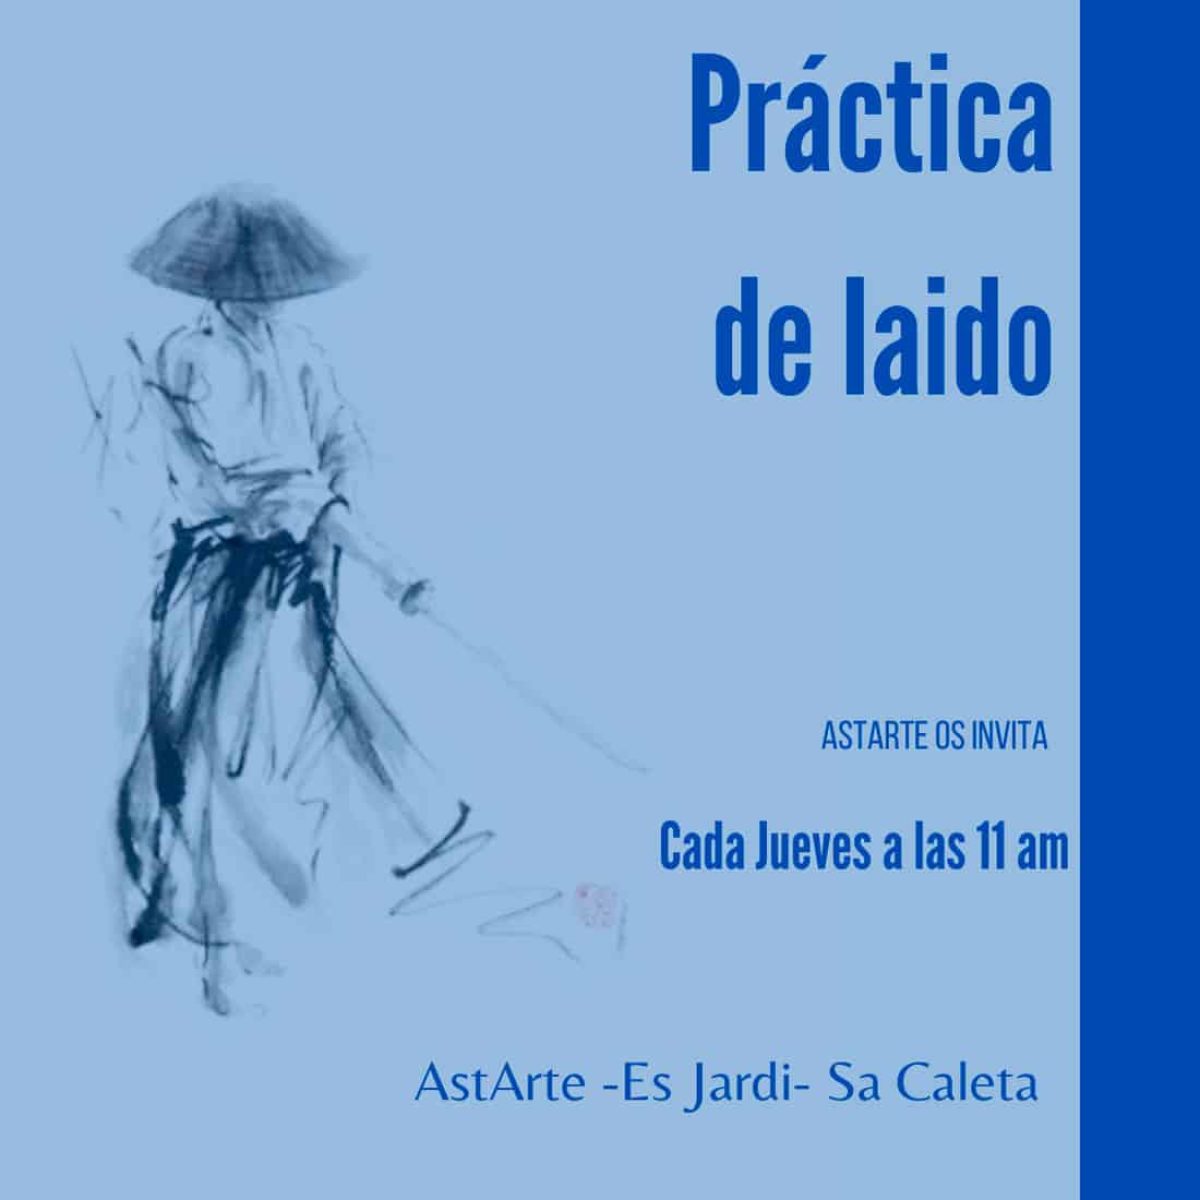 astarte-es-jardi-sa-caleta-ibiza-practices-iaido-ibiza-2021-welcometoibiza